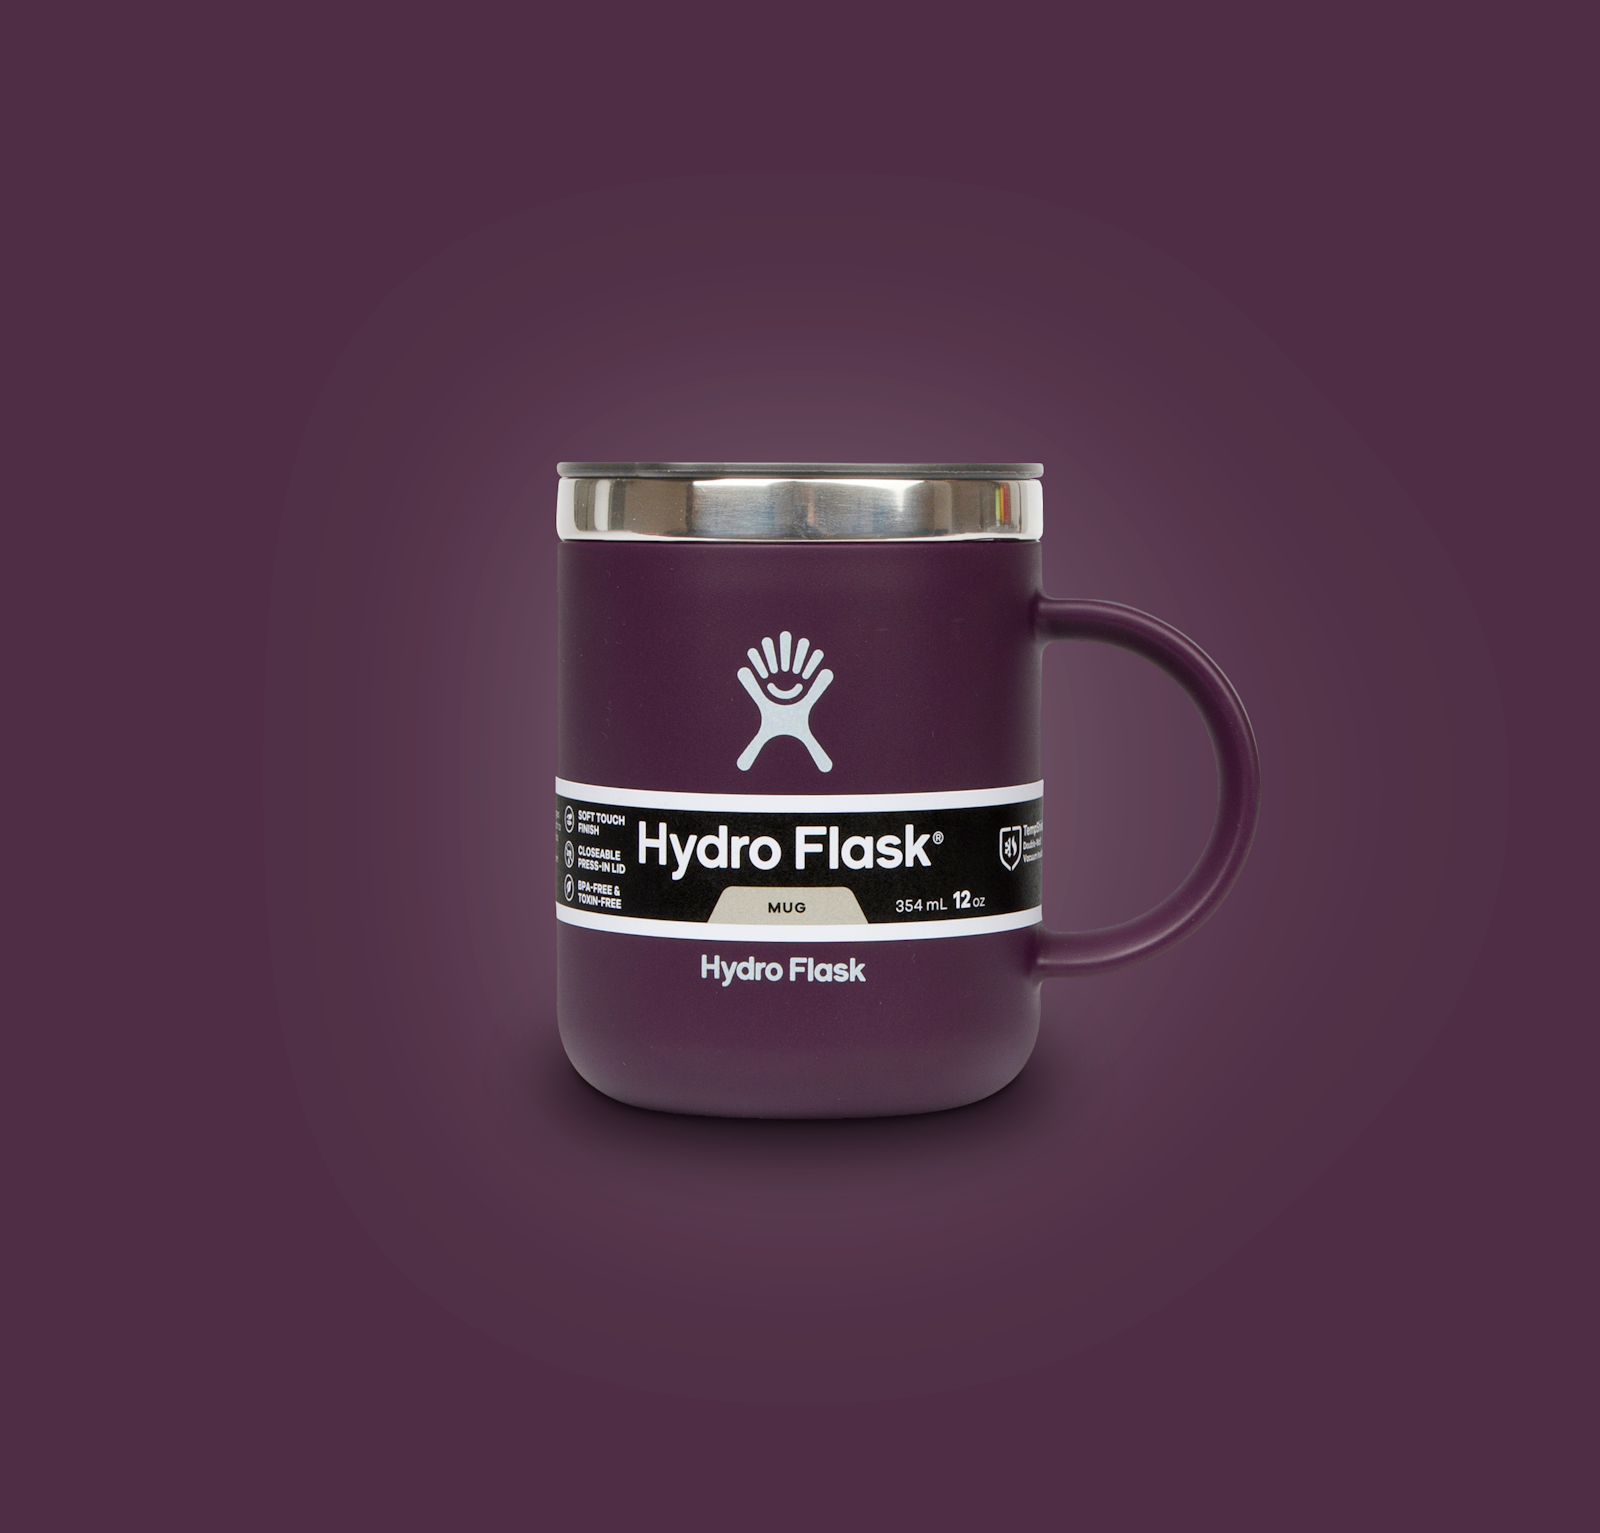 The Hydro Flask brand design Mug in purple on a purple background.